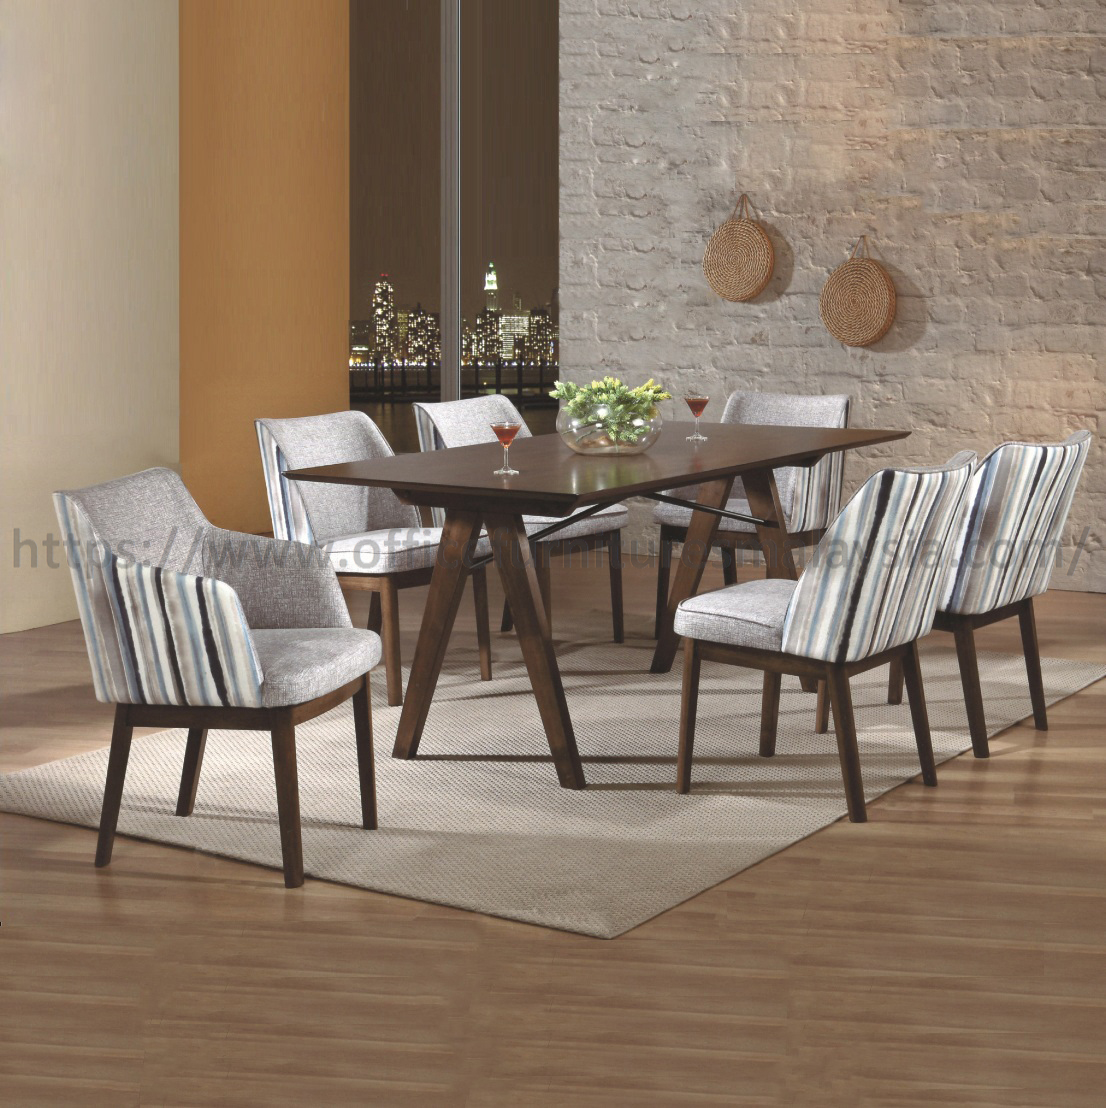 6 ft 6 Seater Solid Wood Rectangular Dining Table Set | Meja Makan Set